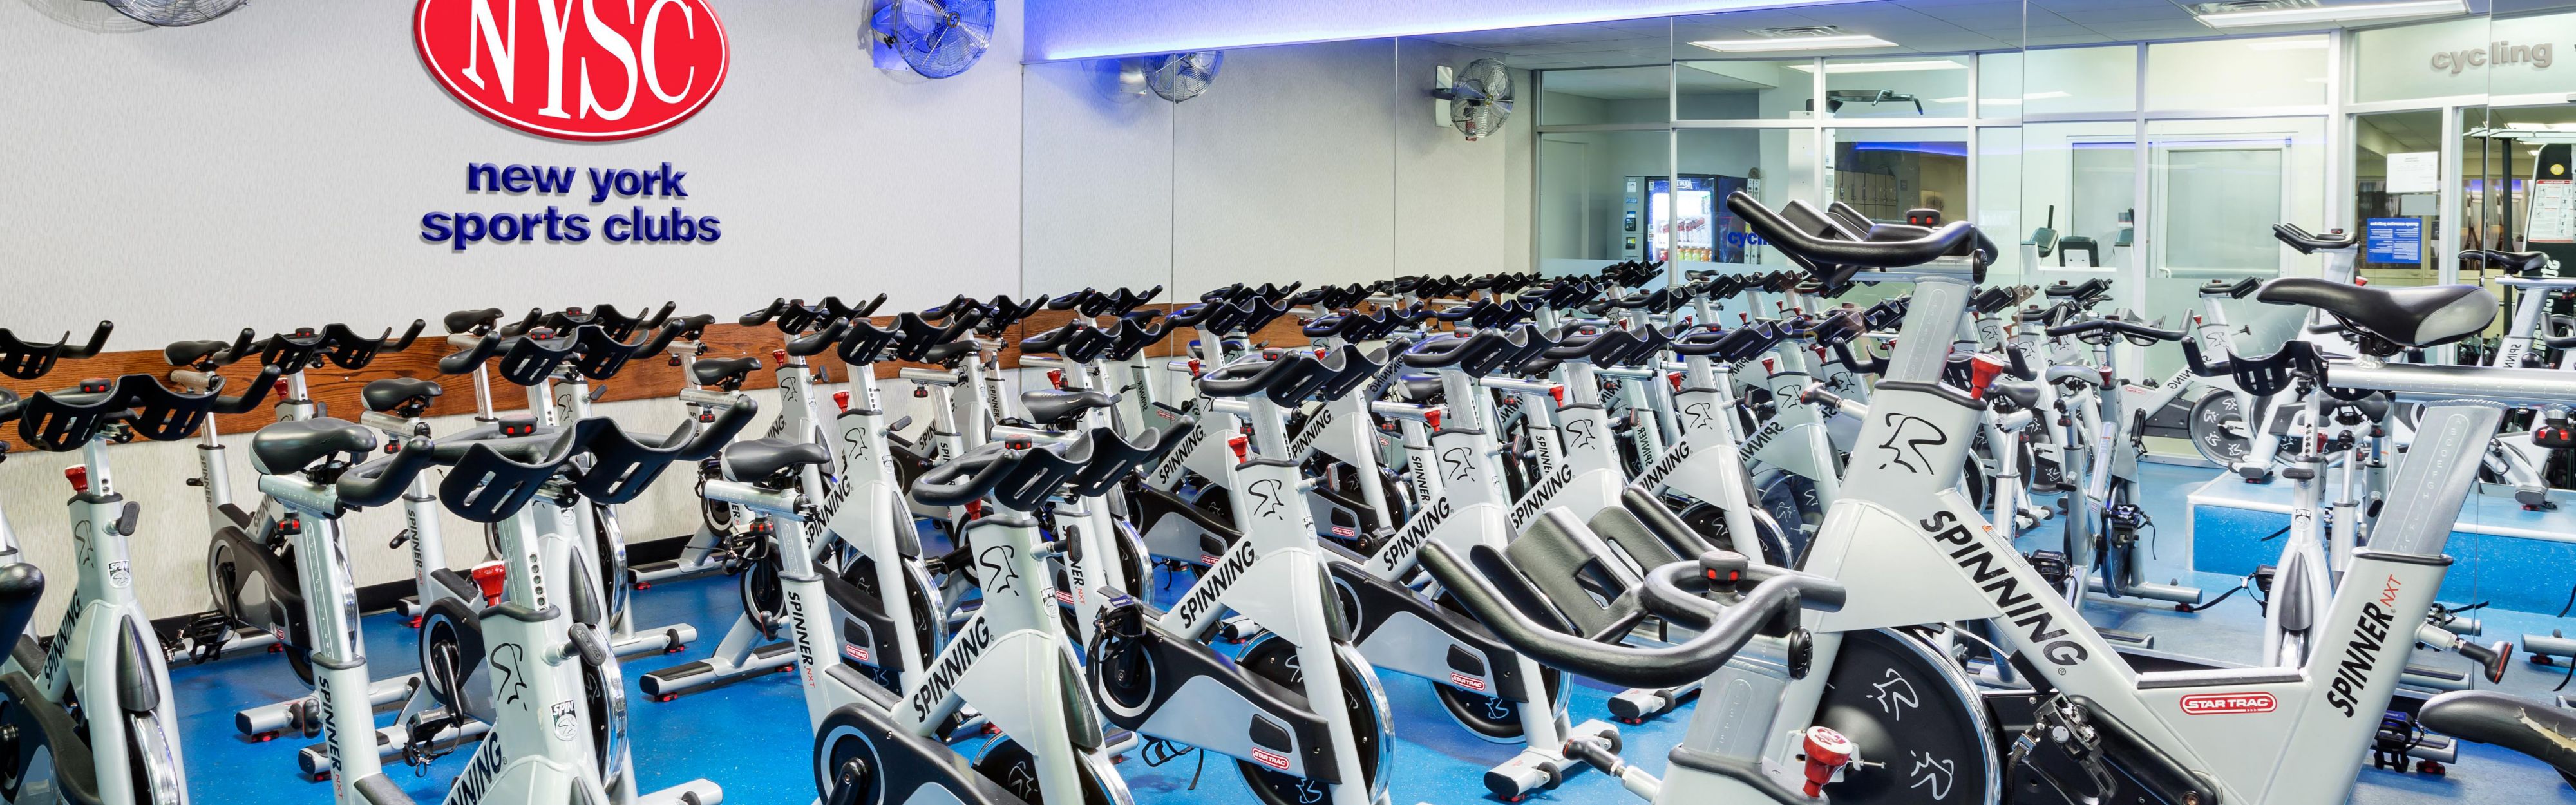 New York Sports Club has plenty of aerobics fitness machines.